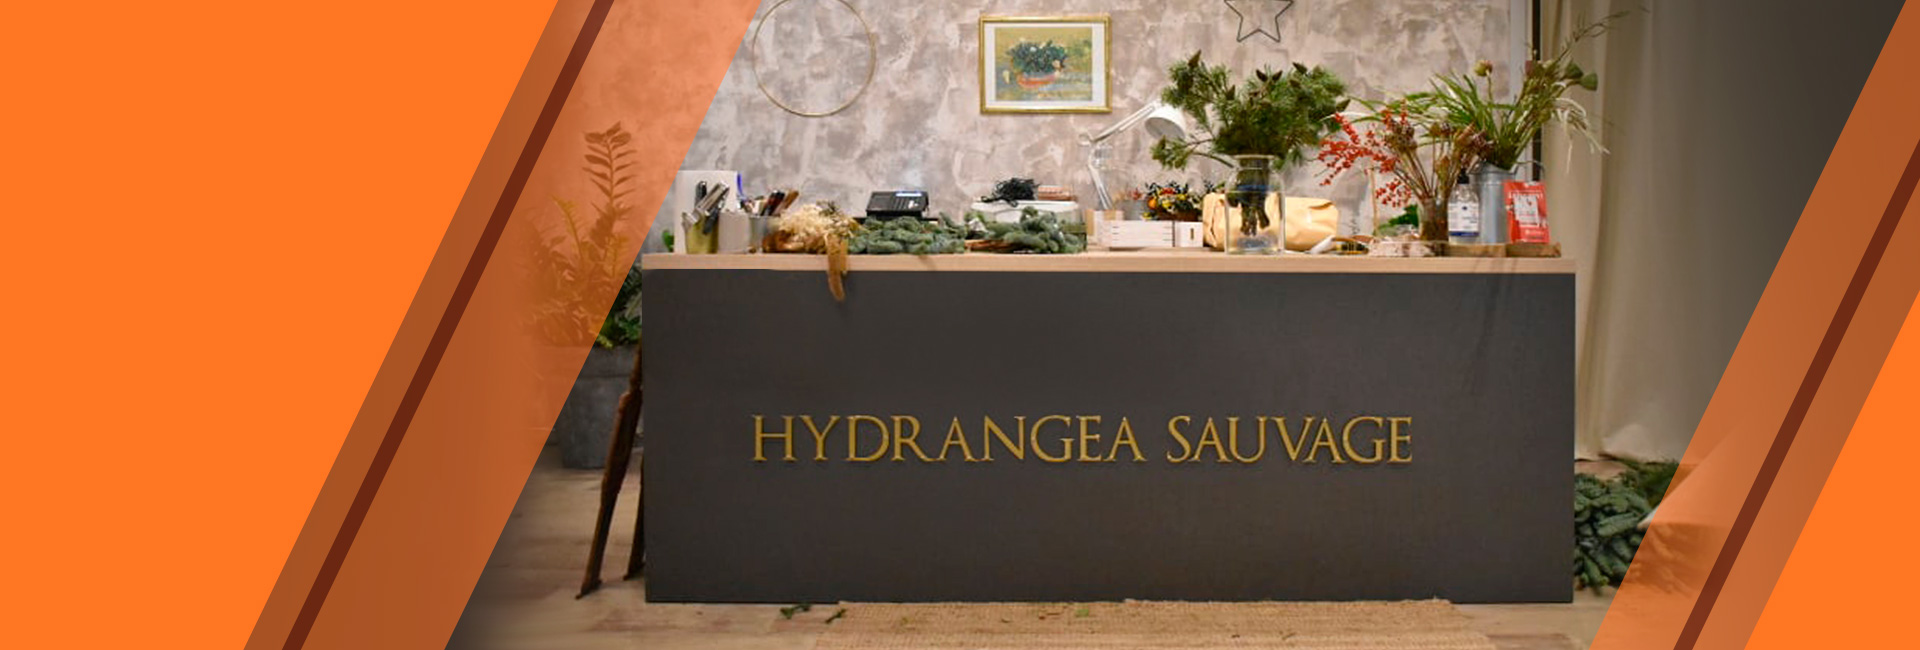 Bancone Hydrangea - Falegnameria 3B